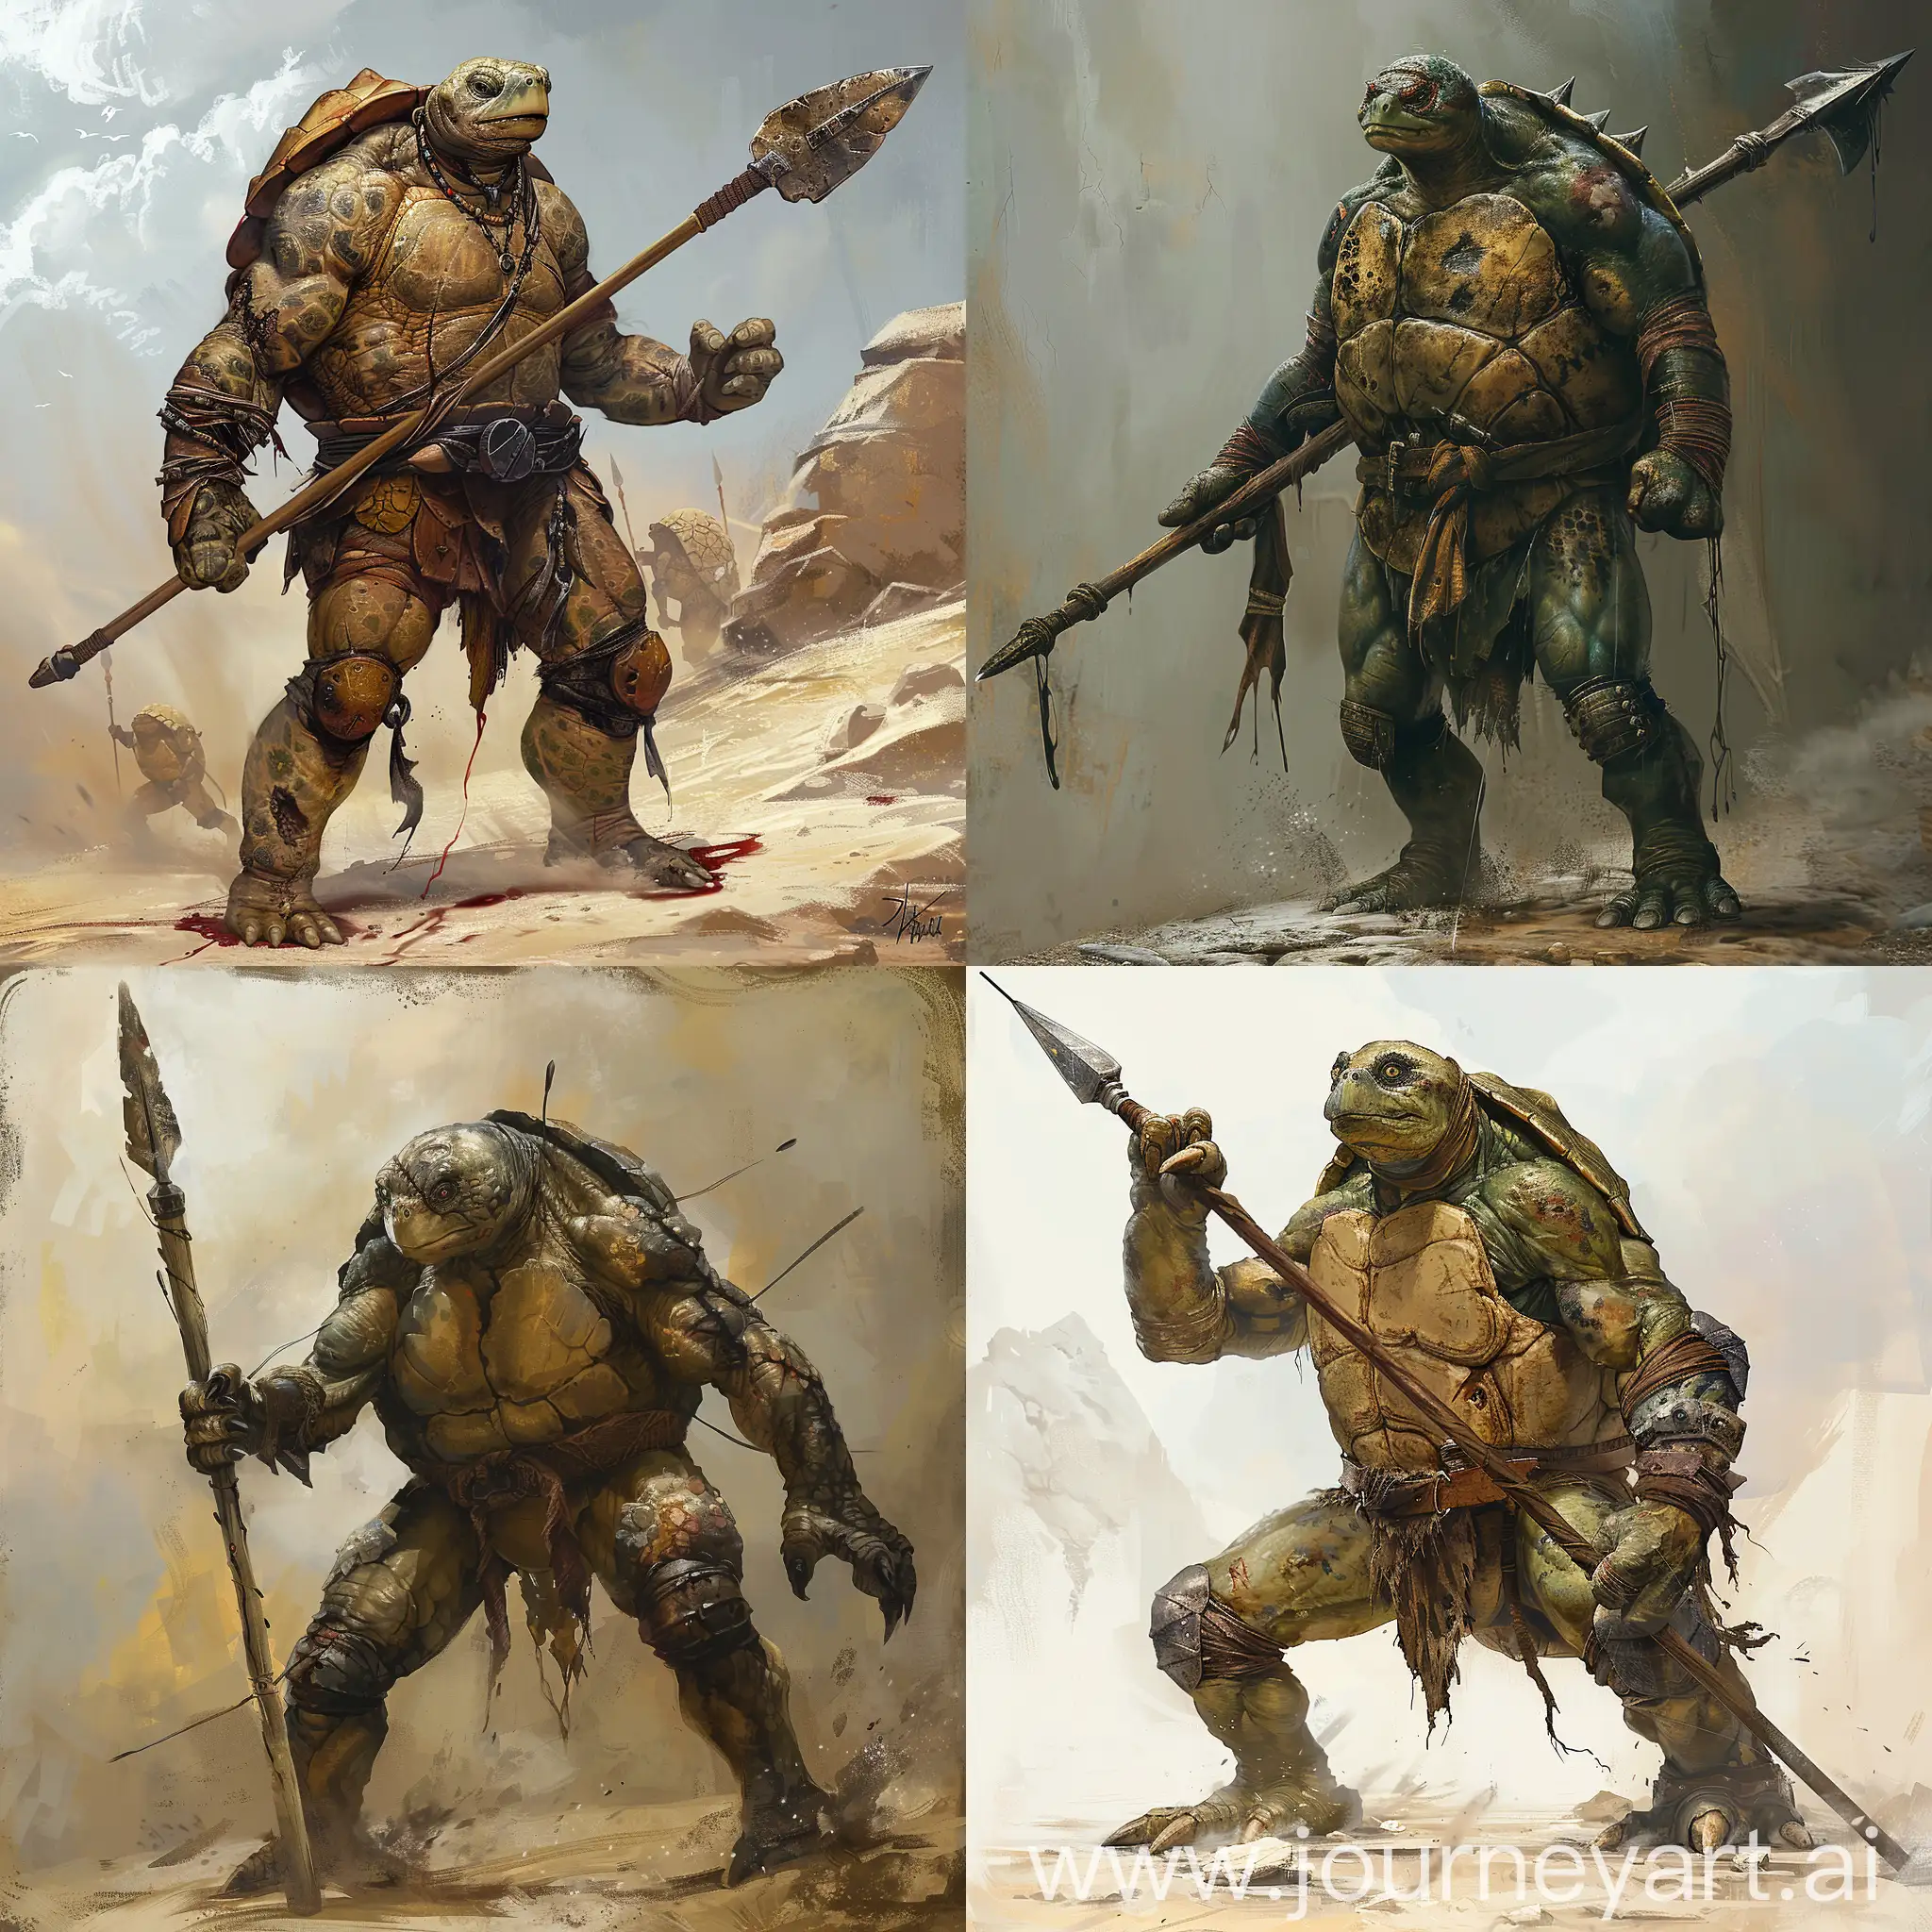 Scarred-Barbarian-Warrior-wielding-Giant-Spear